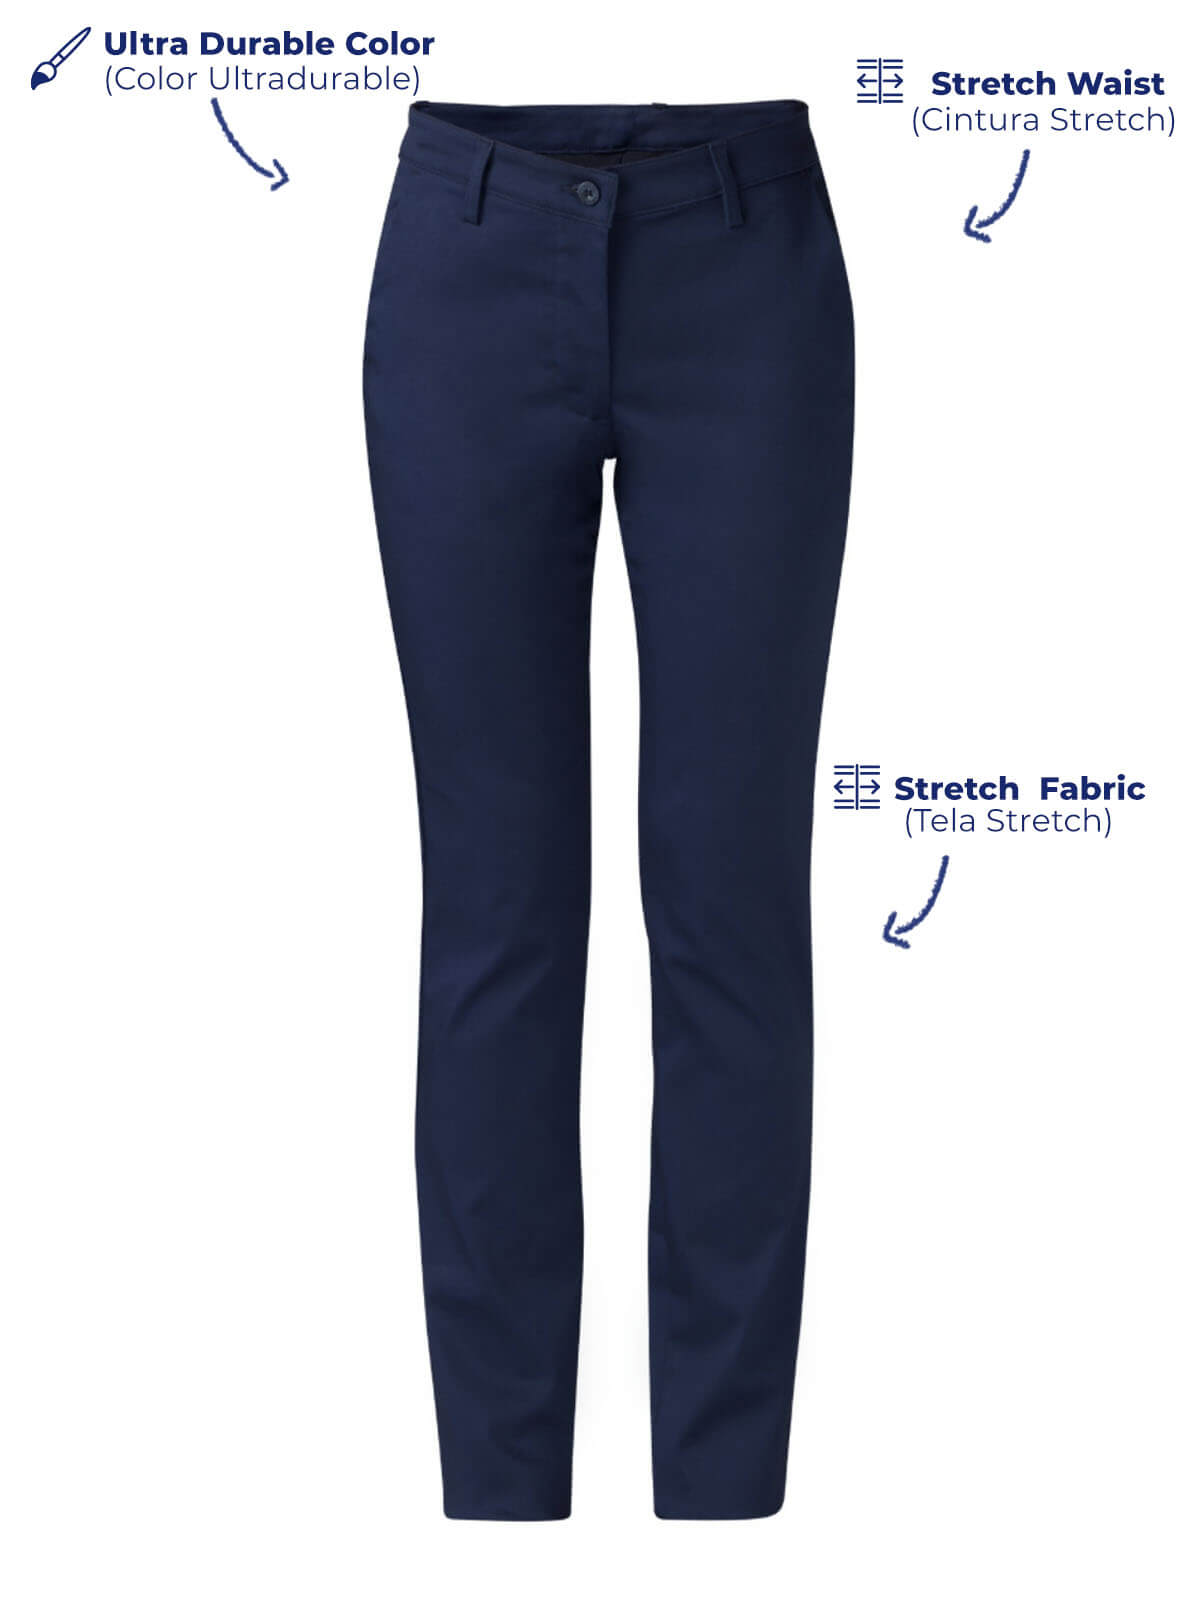 Executive navy blue pants